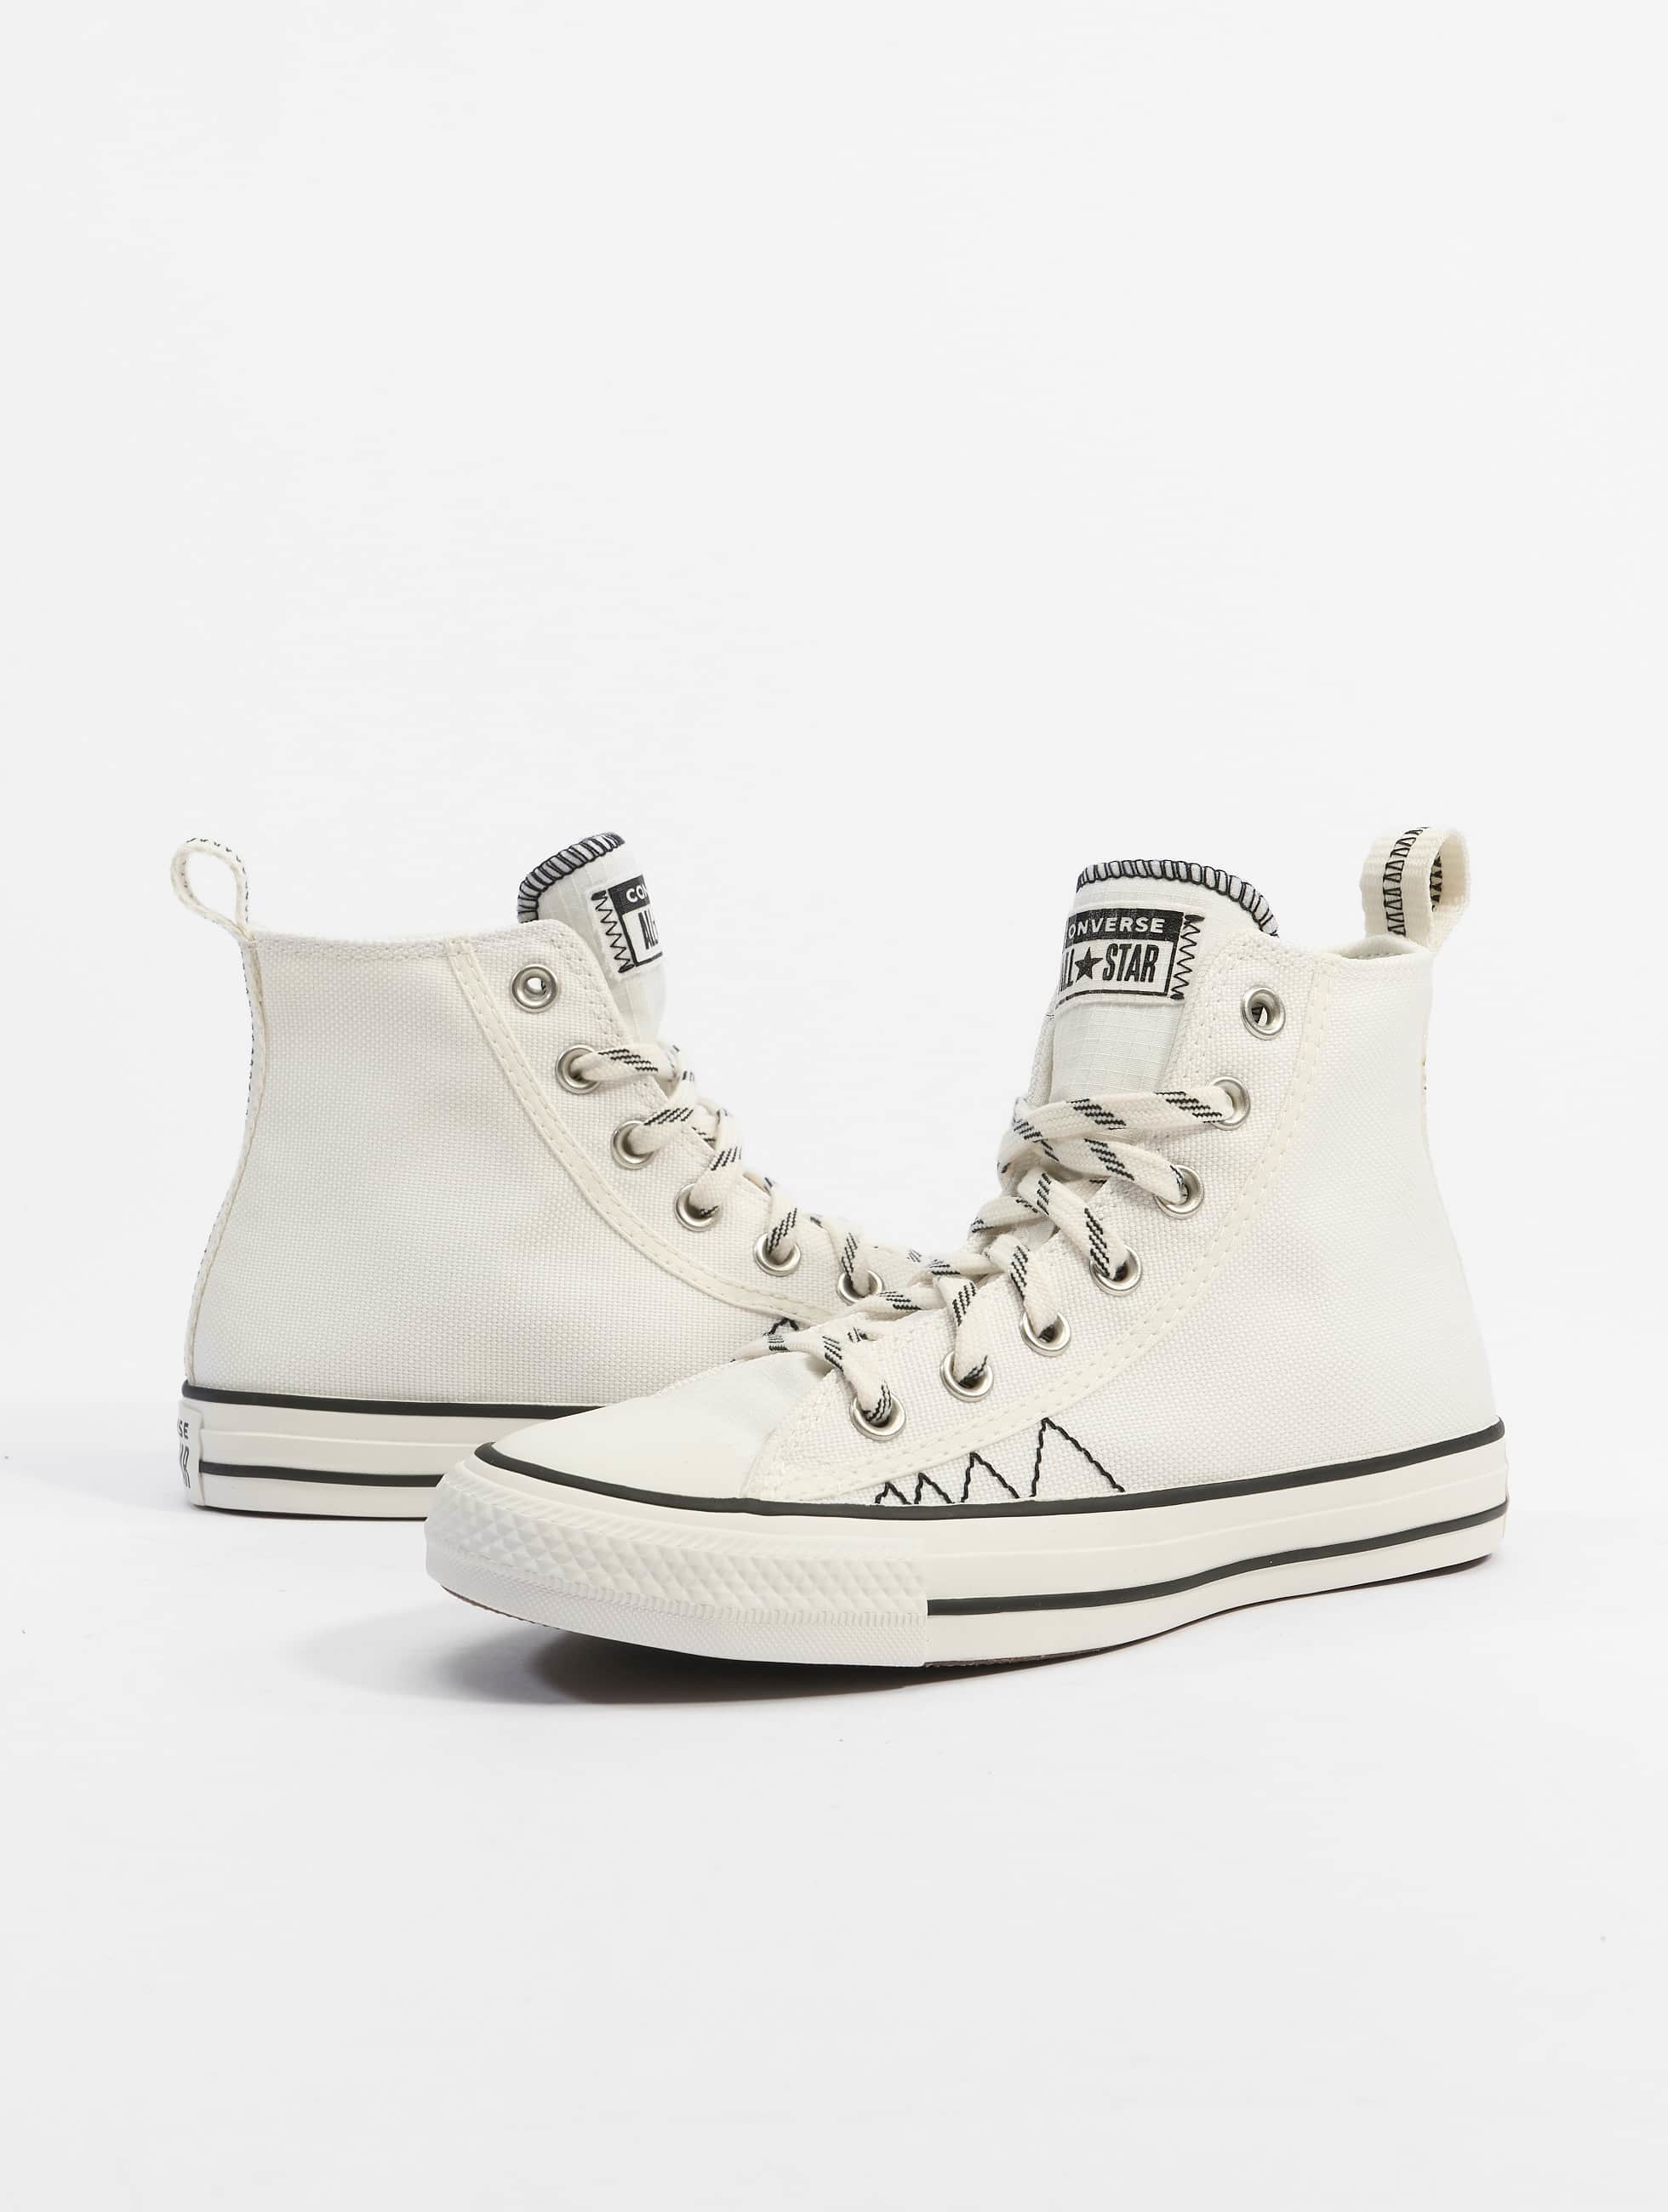 Inútil mordaz posterior Converse Sko / Sneakers Chuck Taylor All Star i hvid 973284